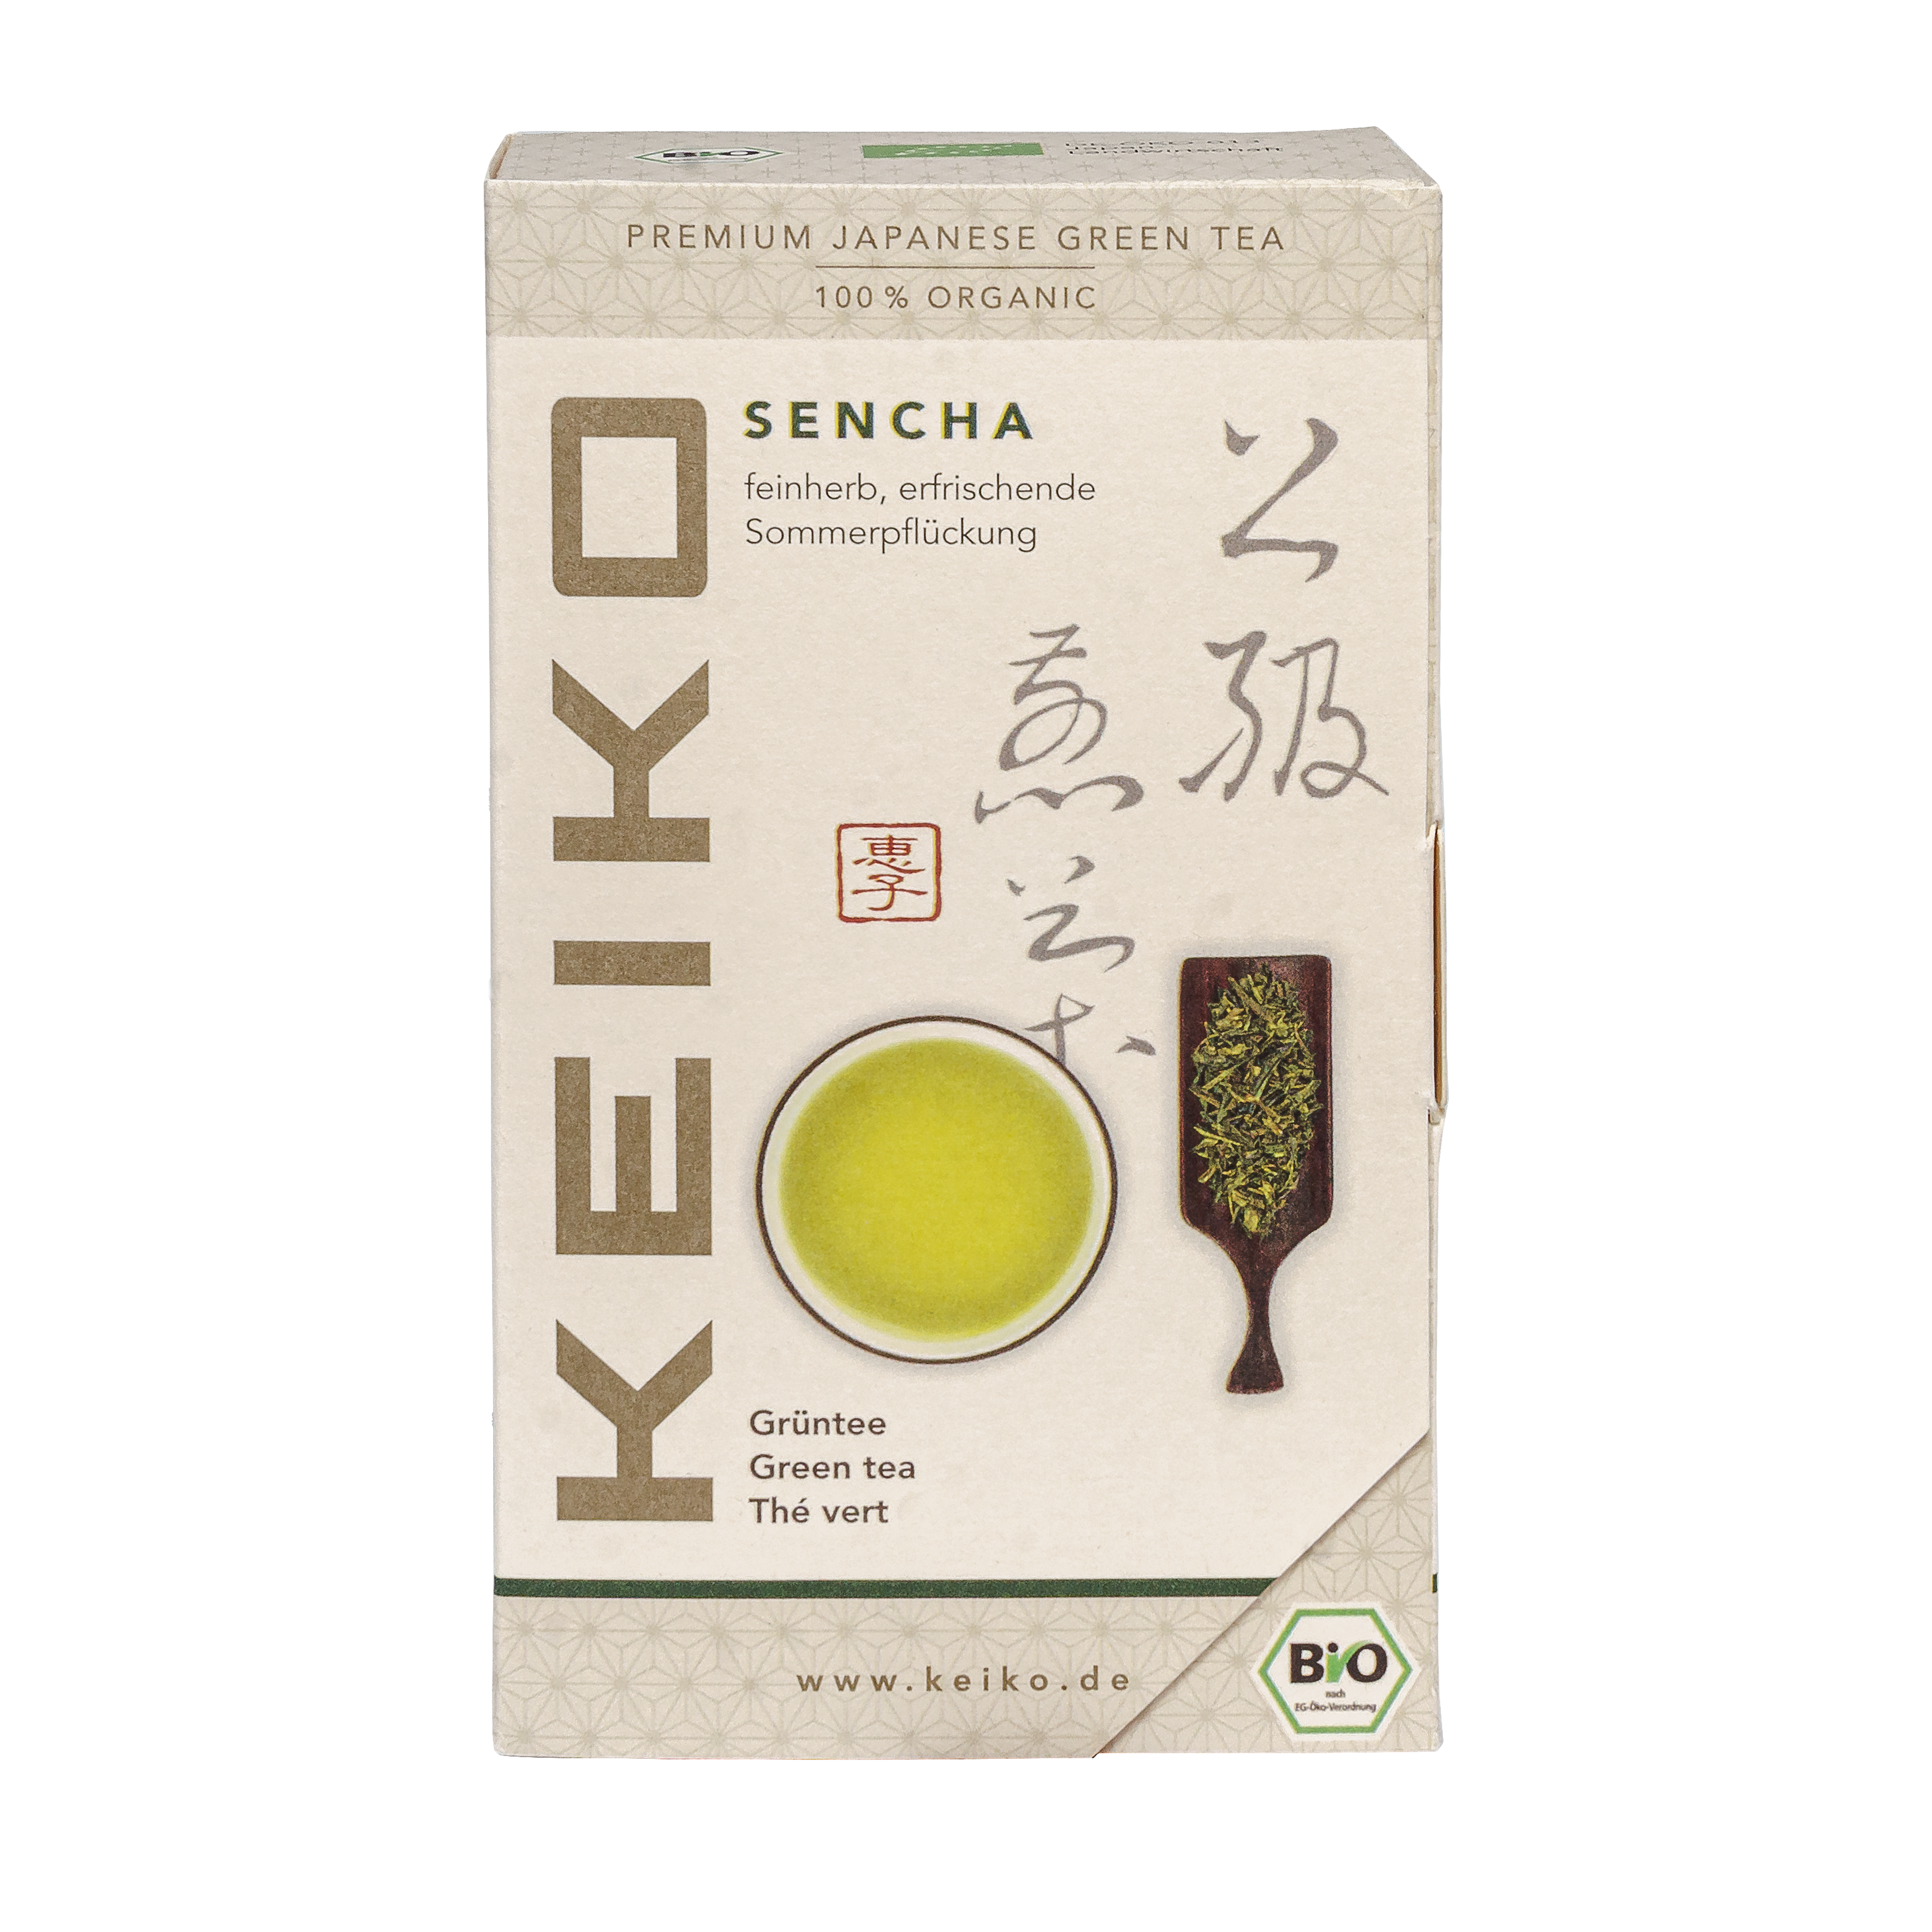 Sencha - Organic Japanese Green Tea